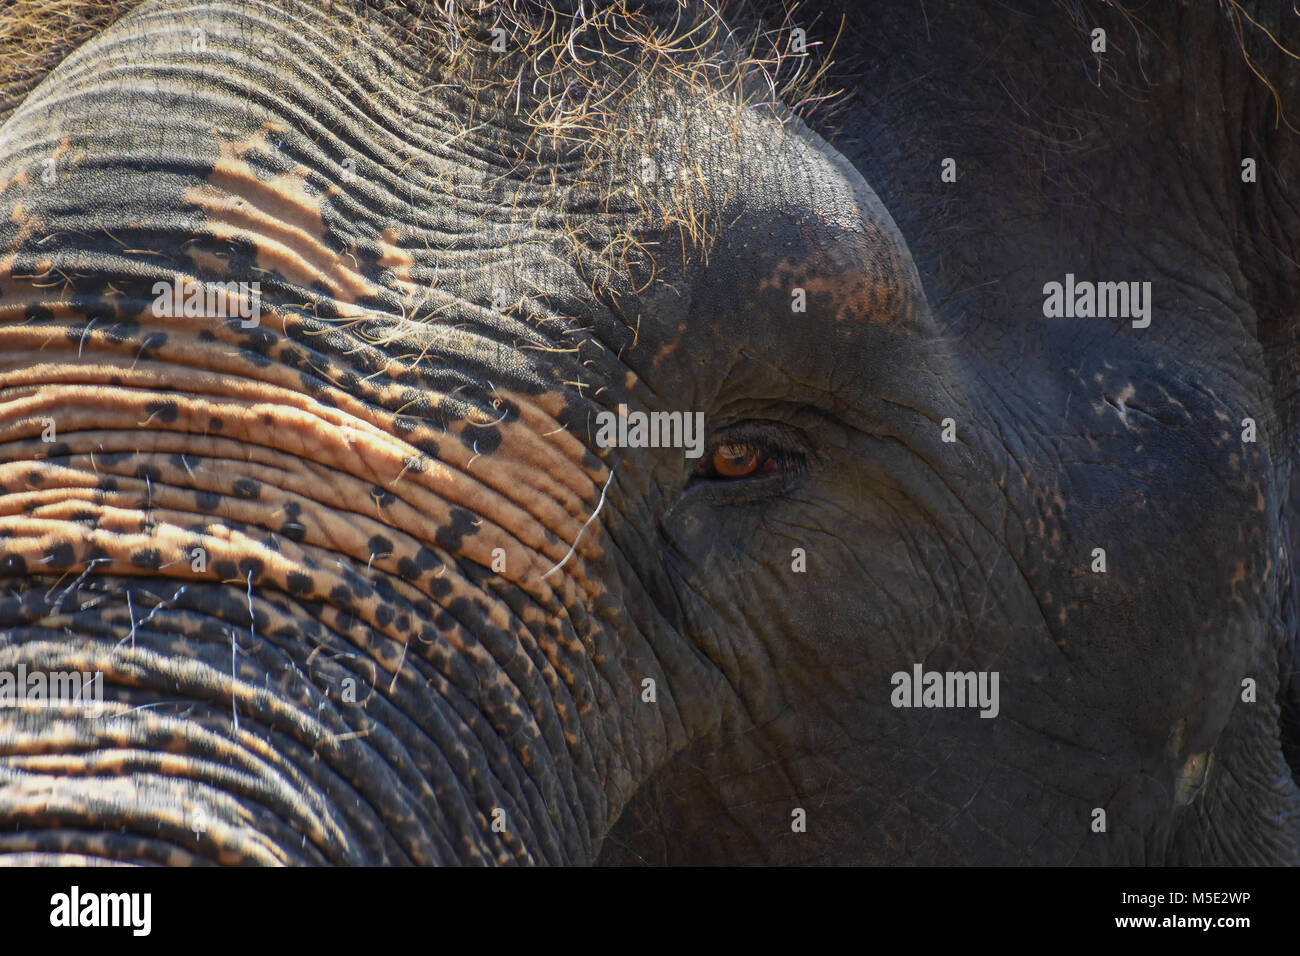 Un close up di un elefante di Sumatra in Bali Indonesia Foto Stock